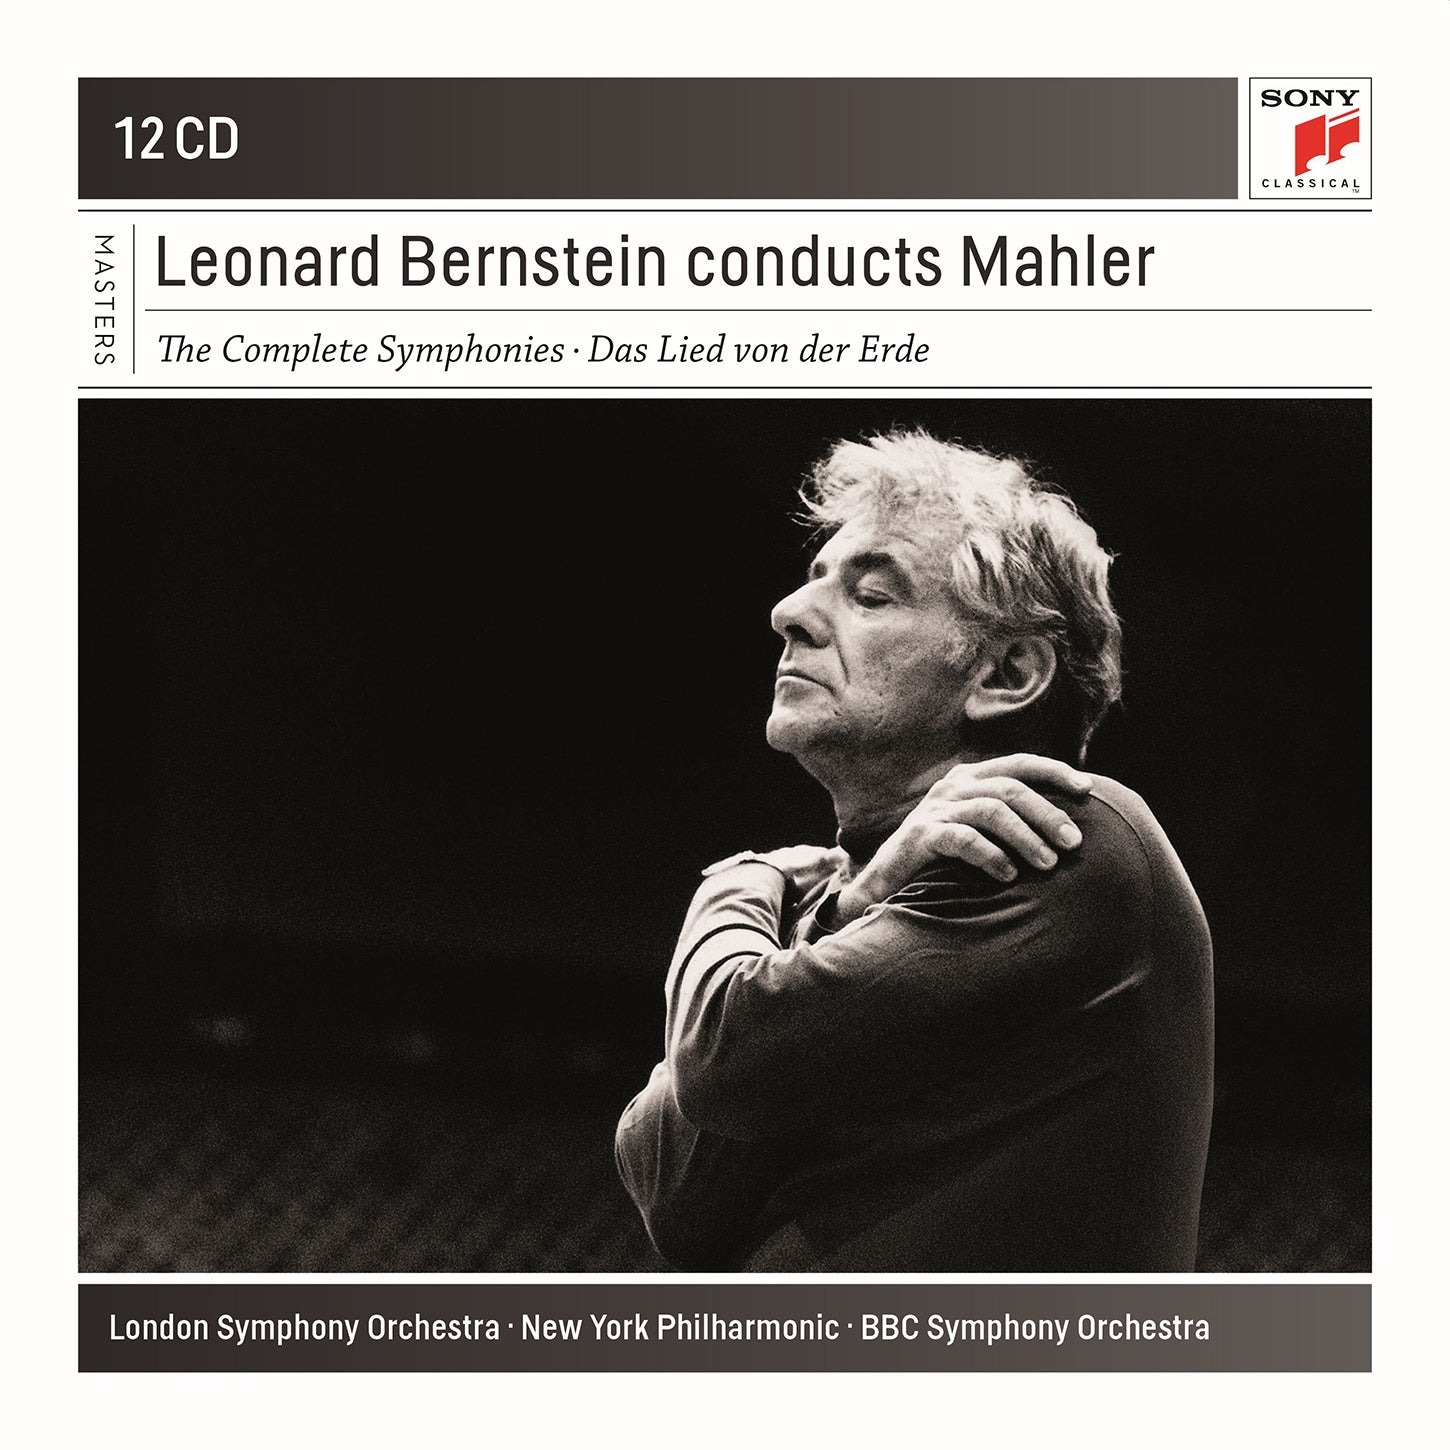 Leonard Bernstein conducts Mahler - Sony: 19439708562 | Buy from